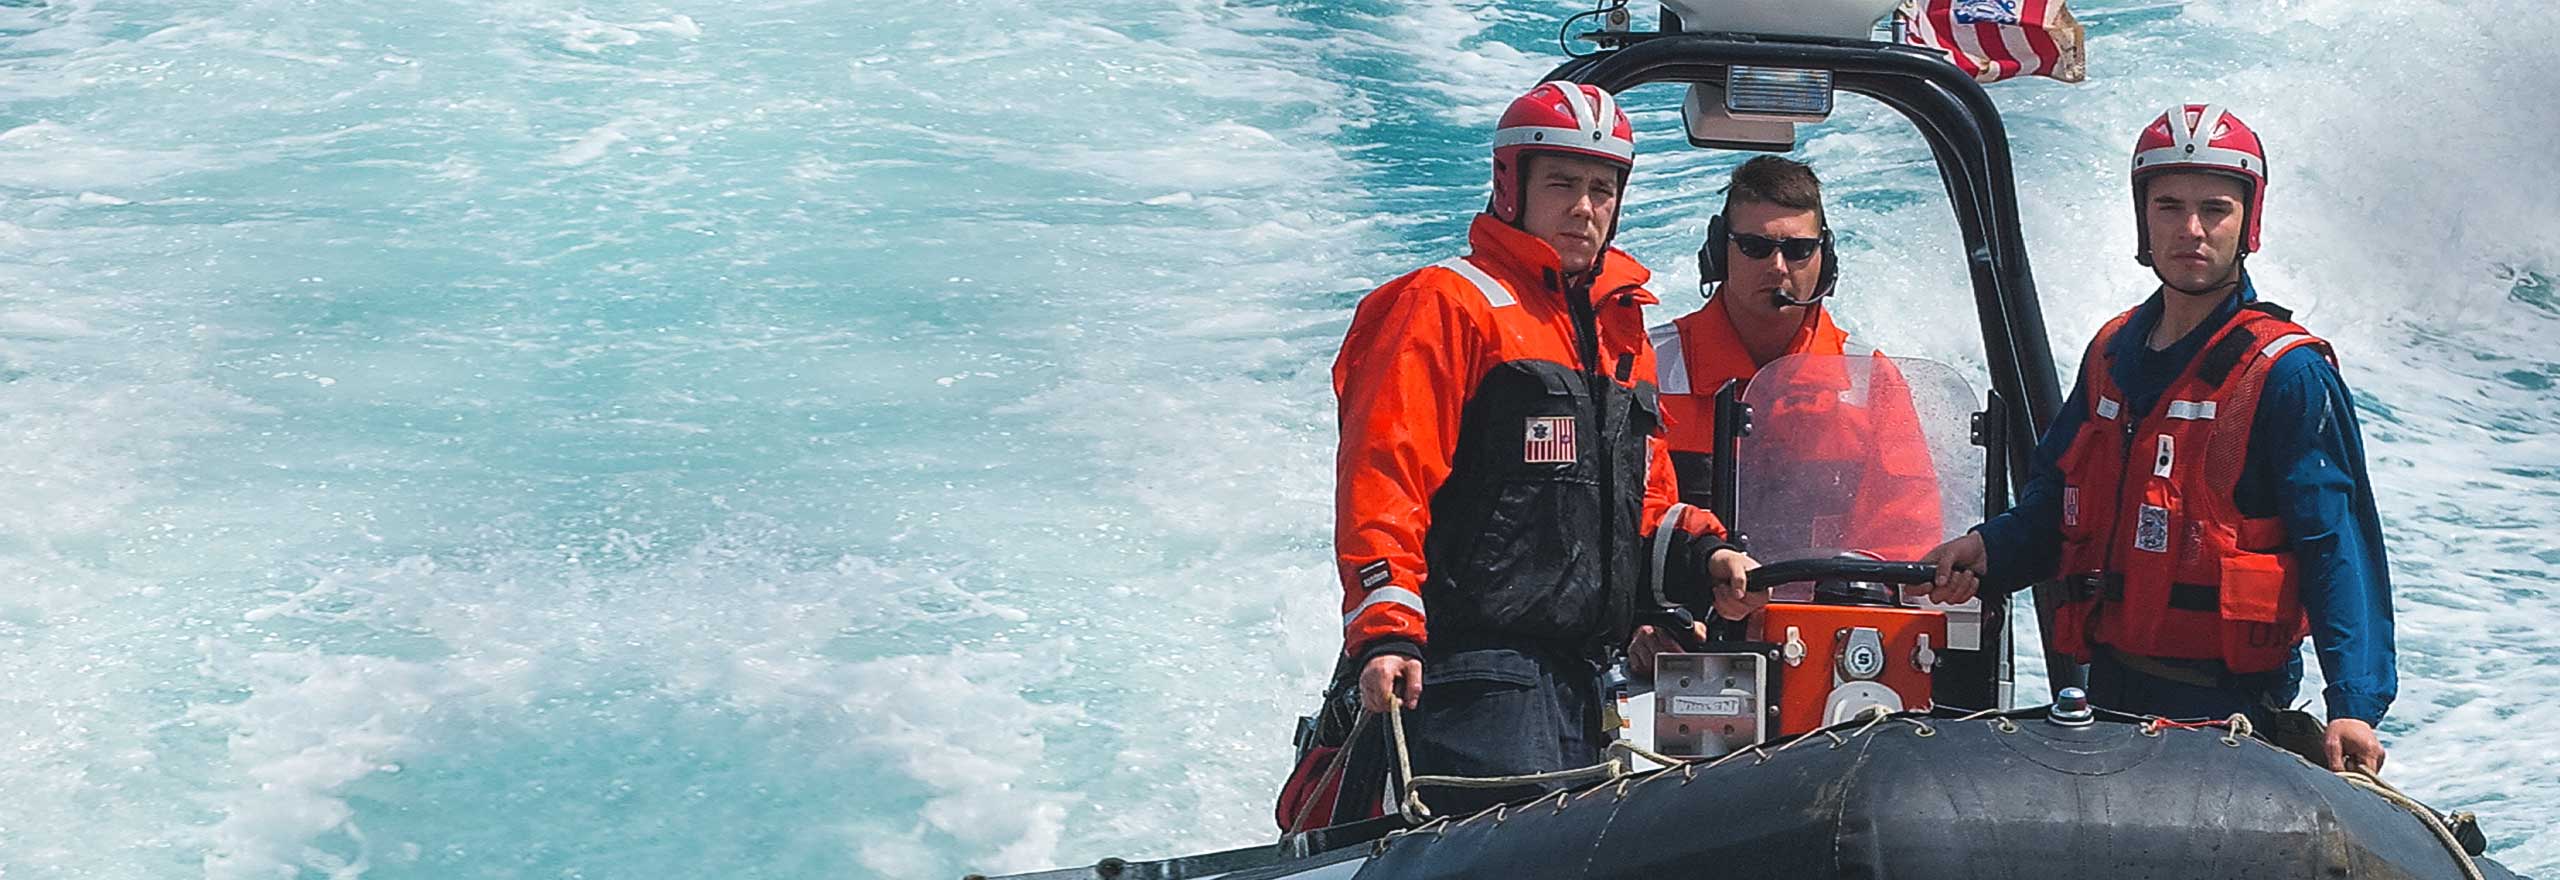 U.S Coast Guard members on boat speeding through open waters